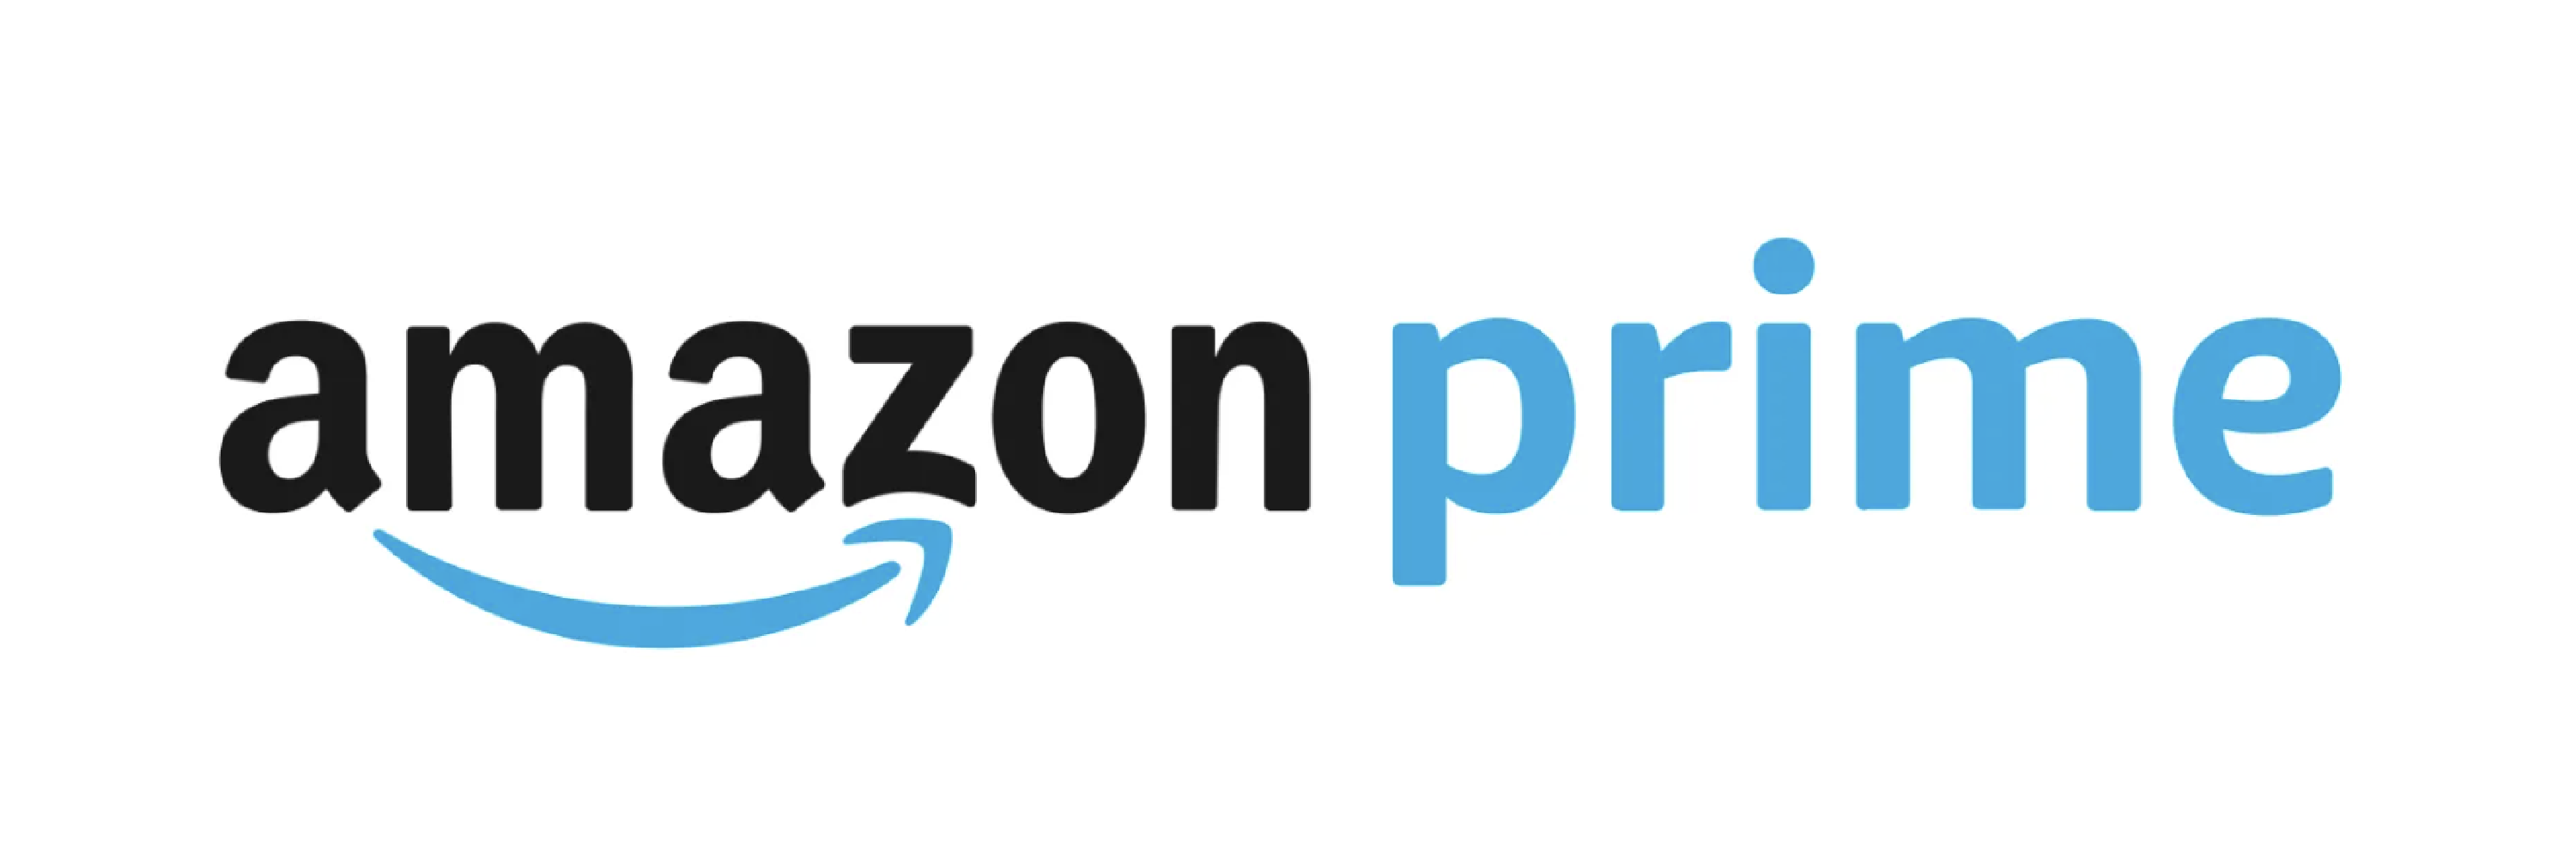 Amazon Prime logo for loyalty program